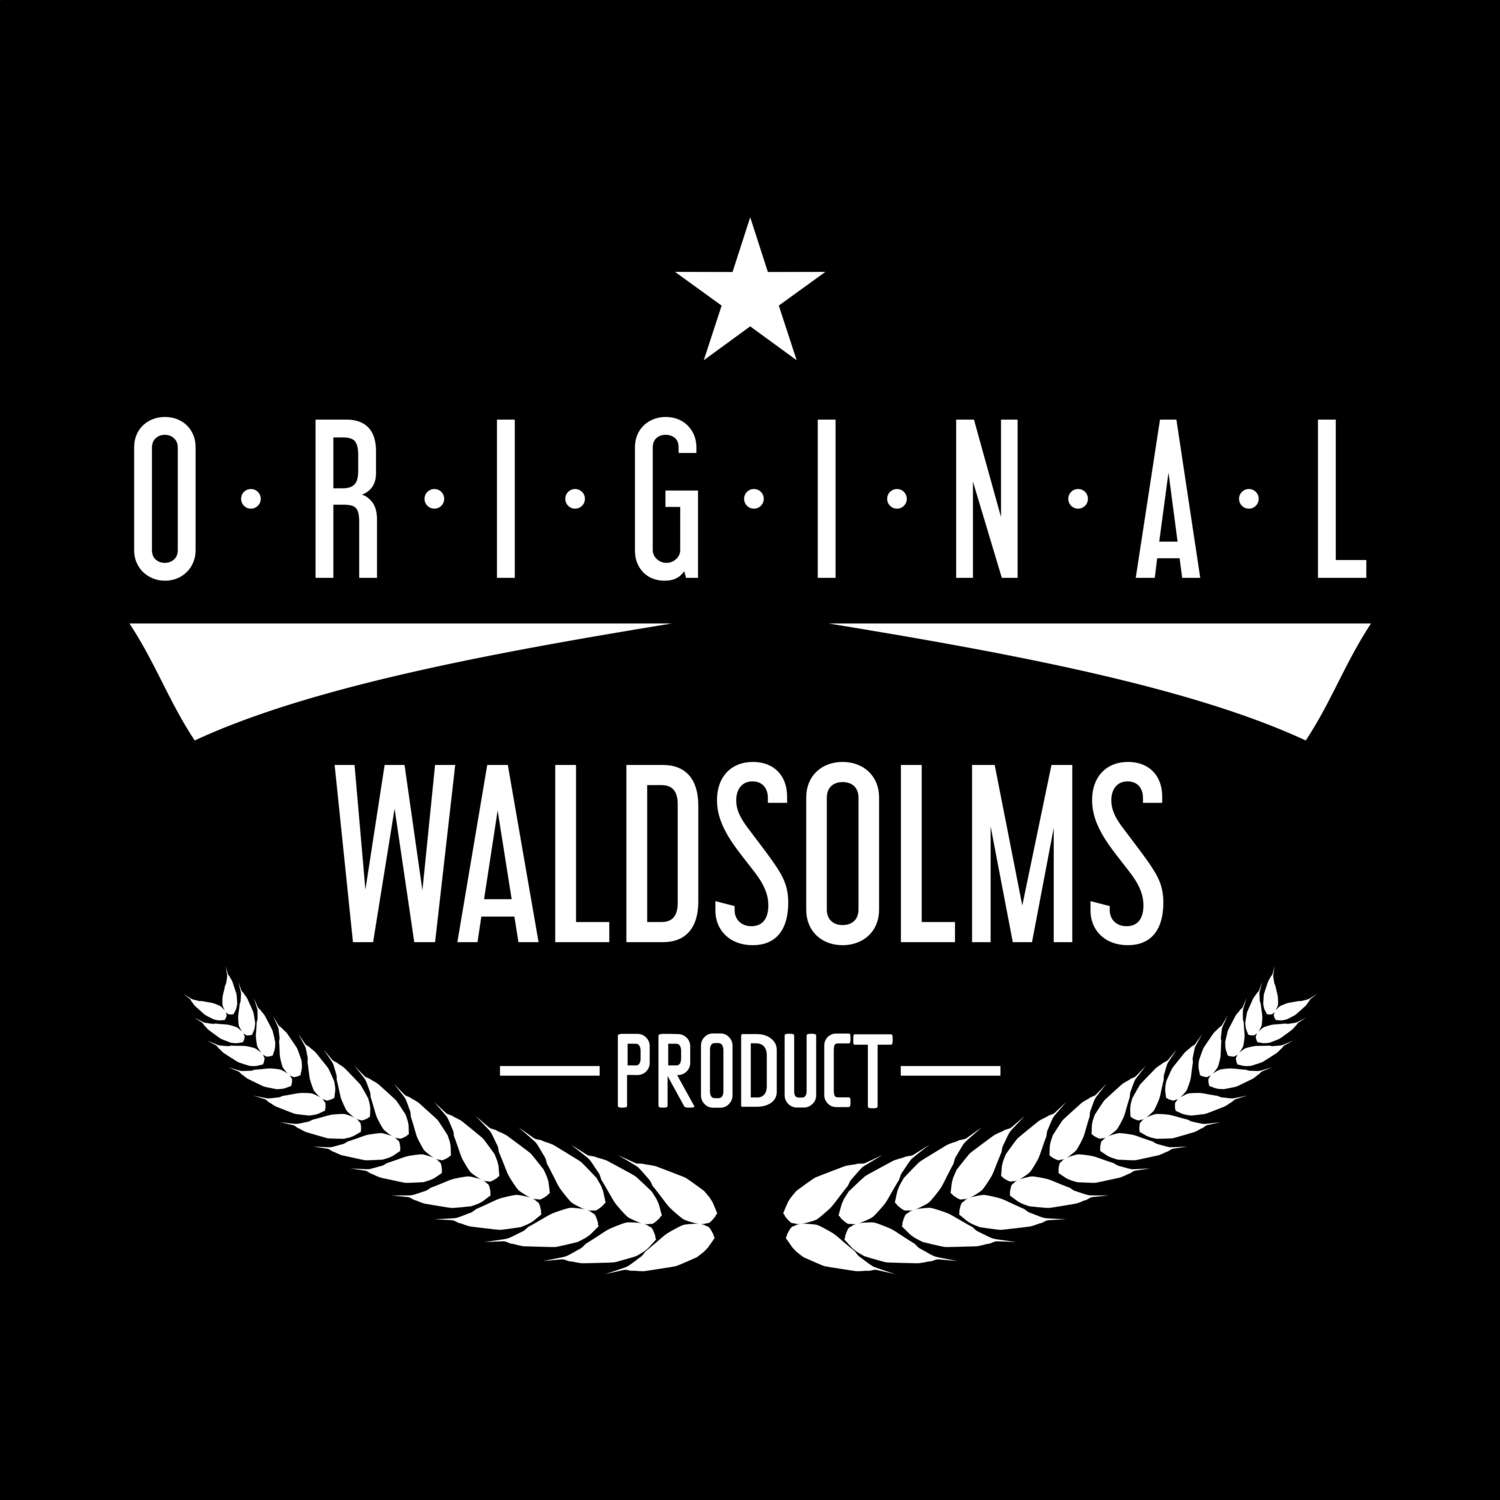 Waldsolms T-Shirt »Original Product«